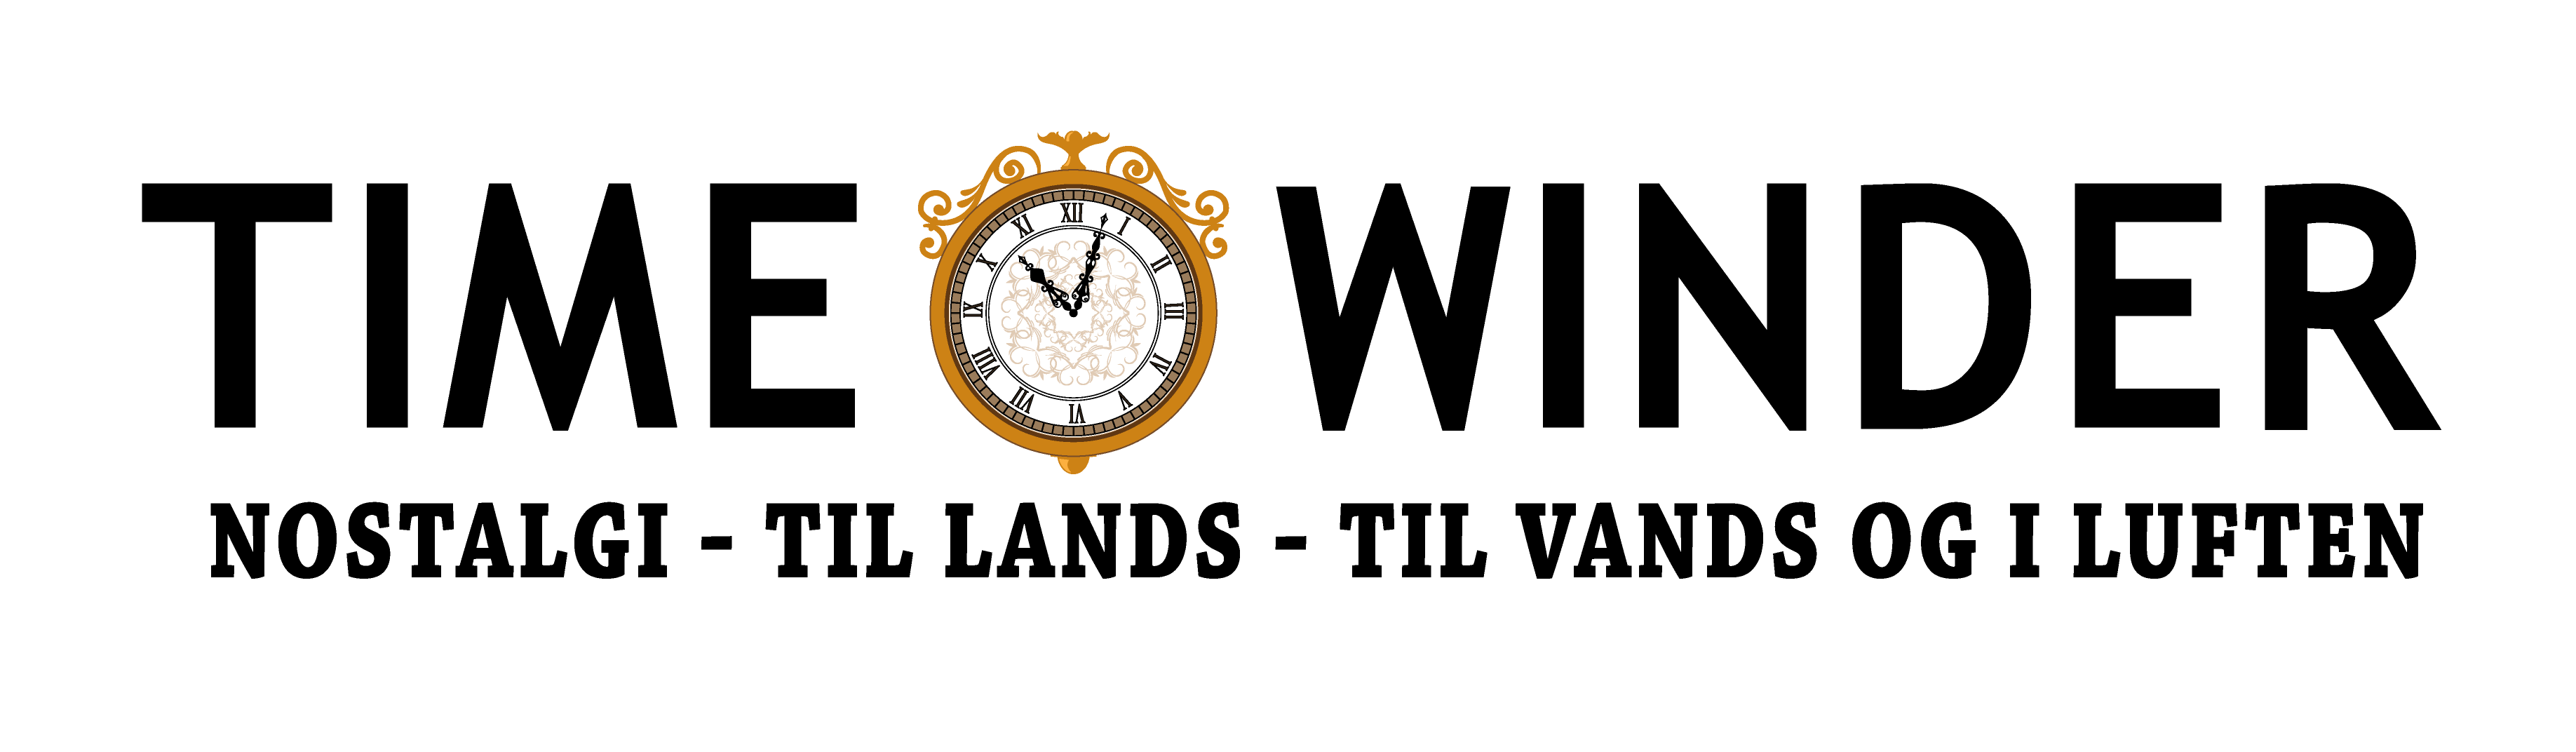 Timewinder logo